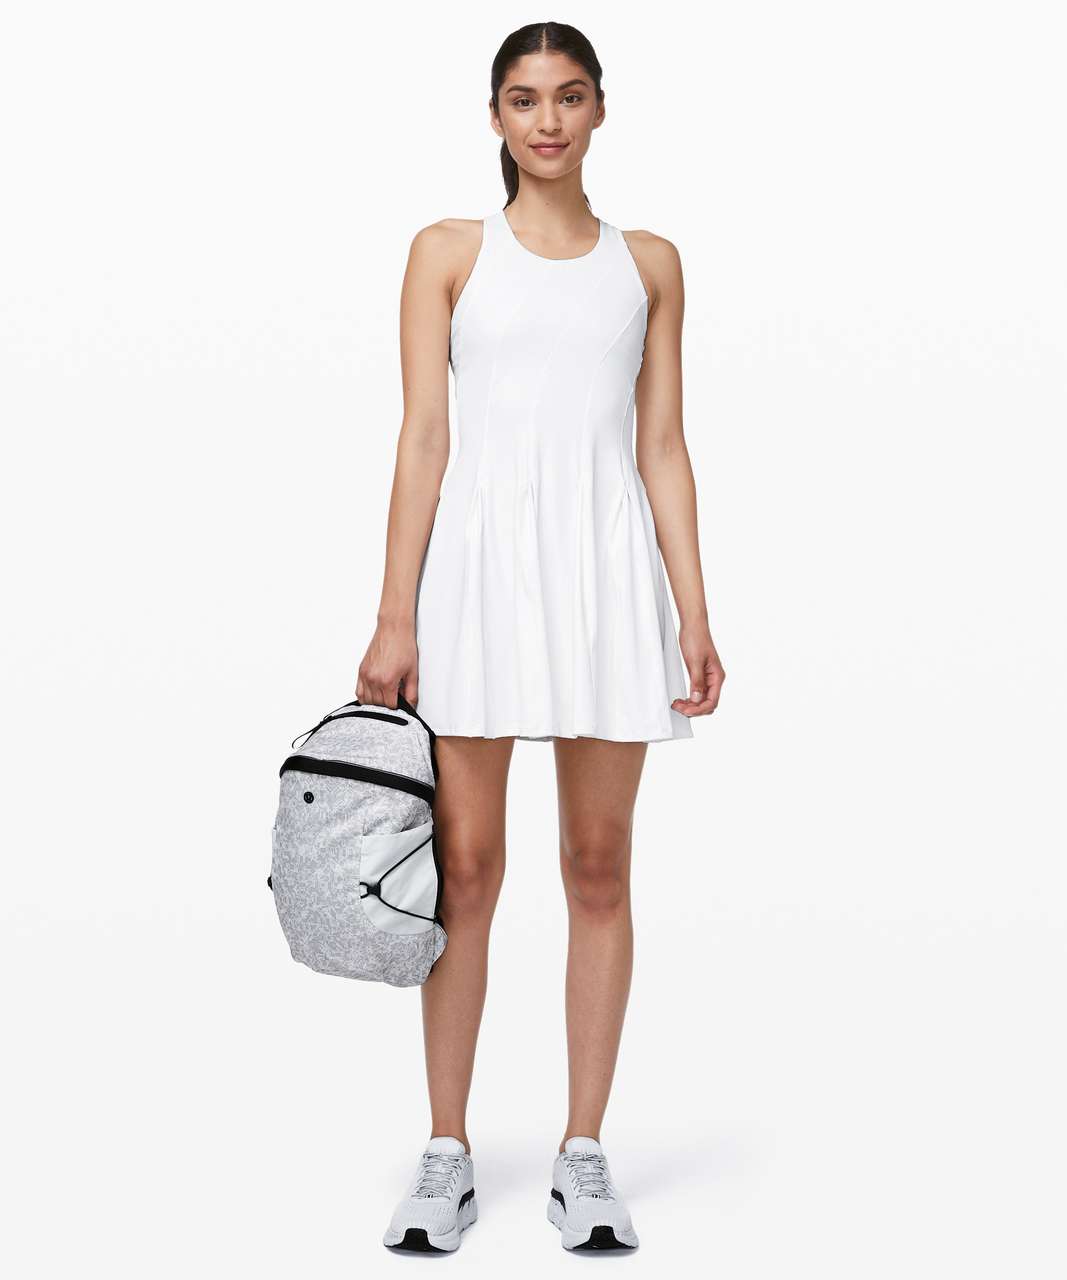 Lululemon Court Crush Tennis Dress - White